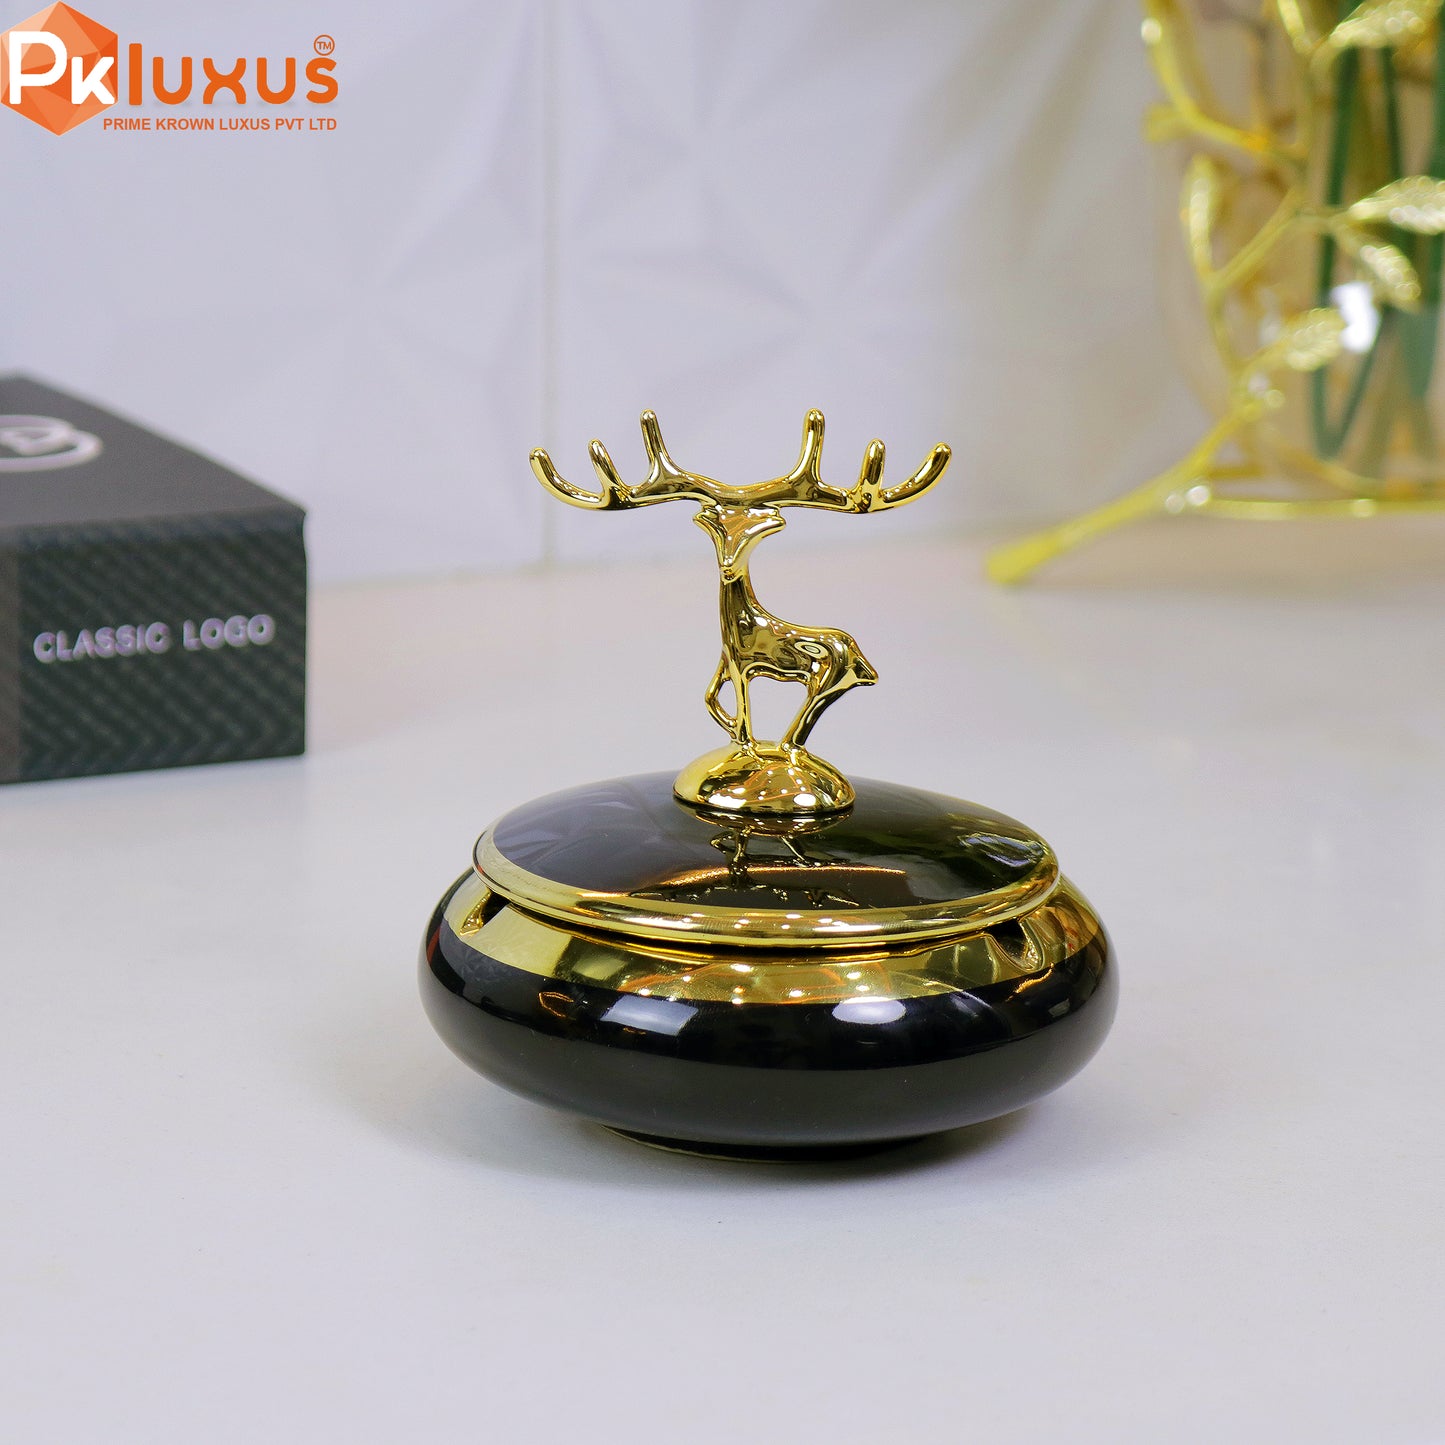 Luxury Black & Golden Deer Ashtray With Lid By PK LUXUS™ - PK LUXUS